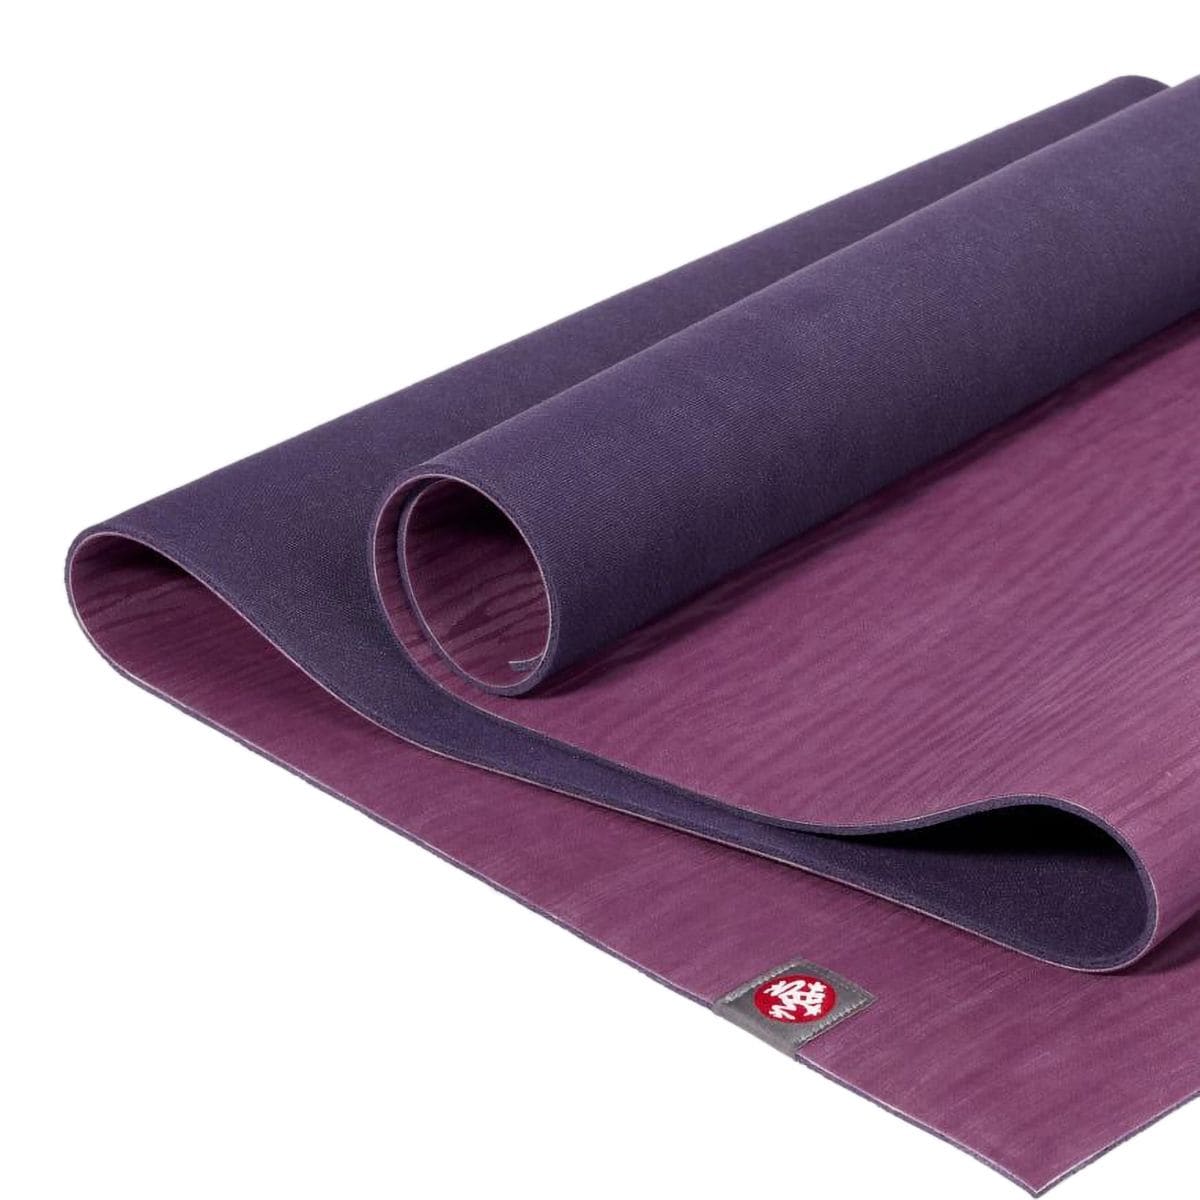  Manduka eKO Lite 4mm Yoga Mat - Yoga